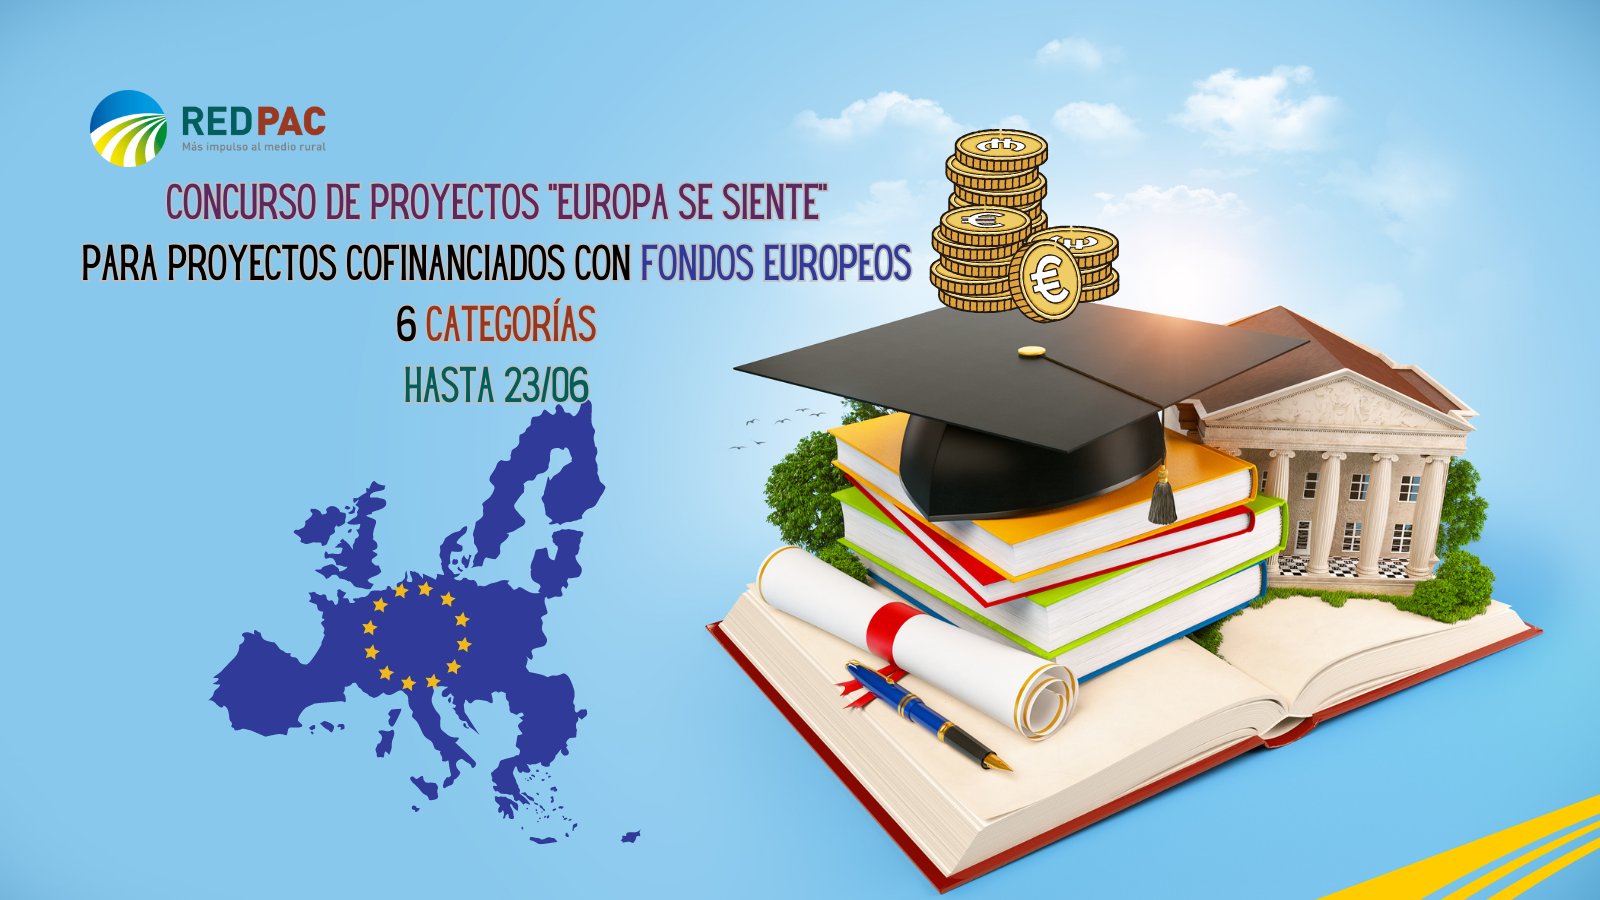 El “Concurso de comunicación de Fondos Europeos” premia a los proyectos que se hayan ejecutado a través de fondos europeos en España